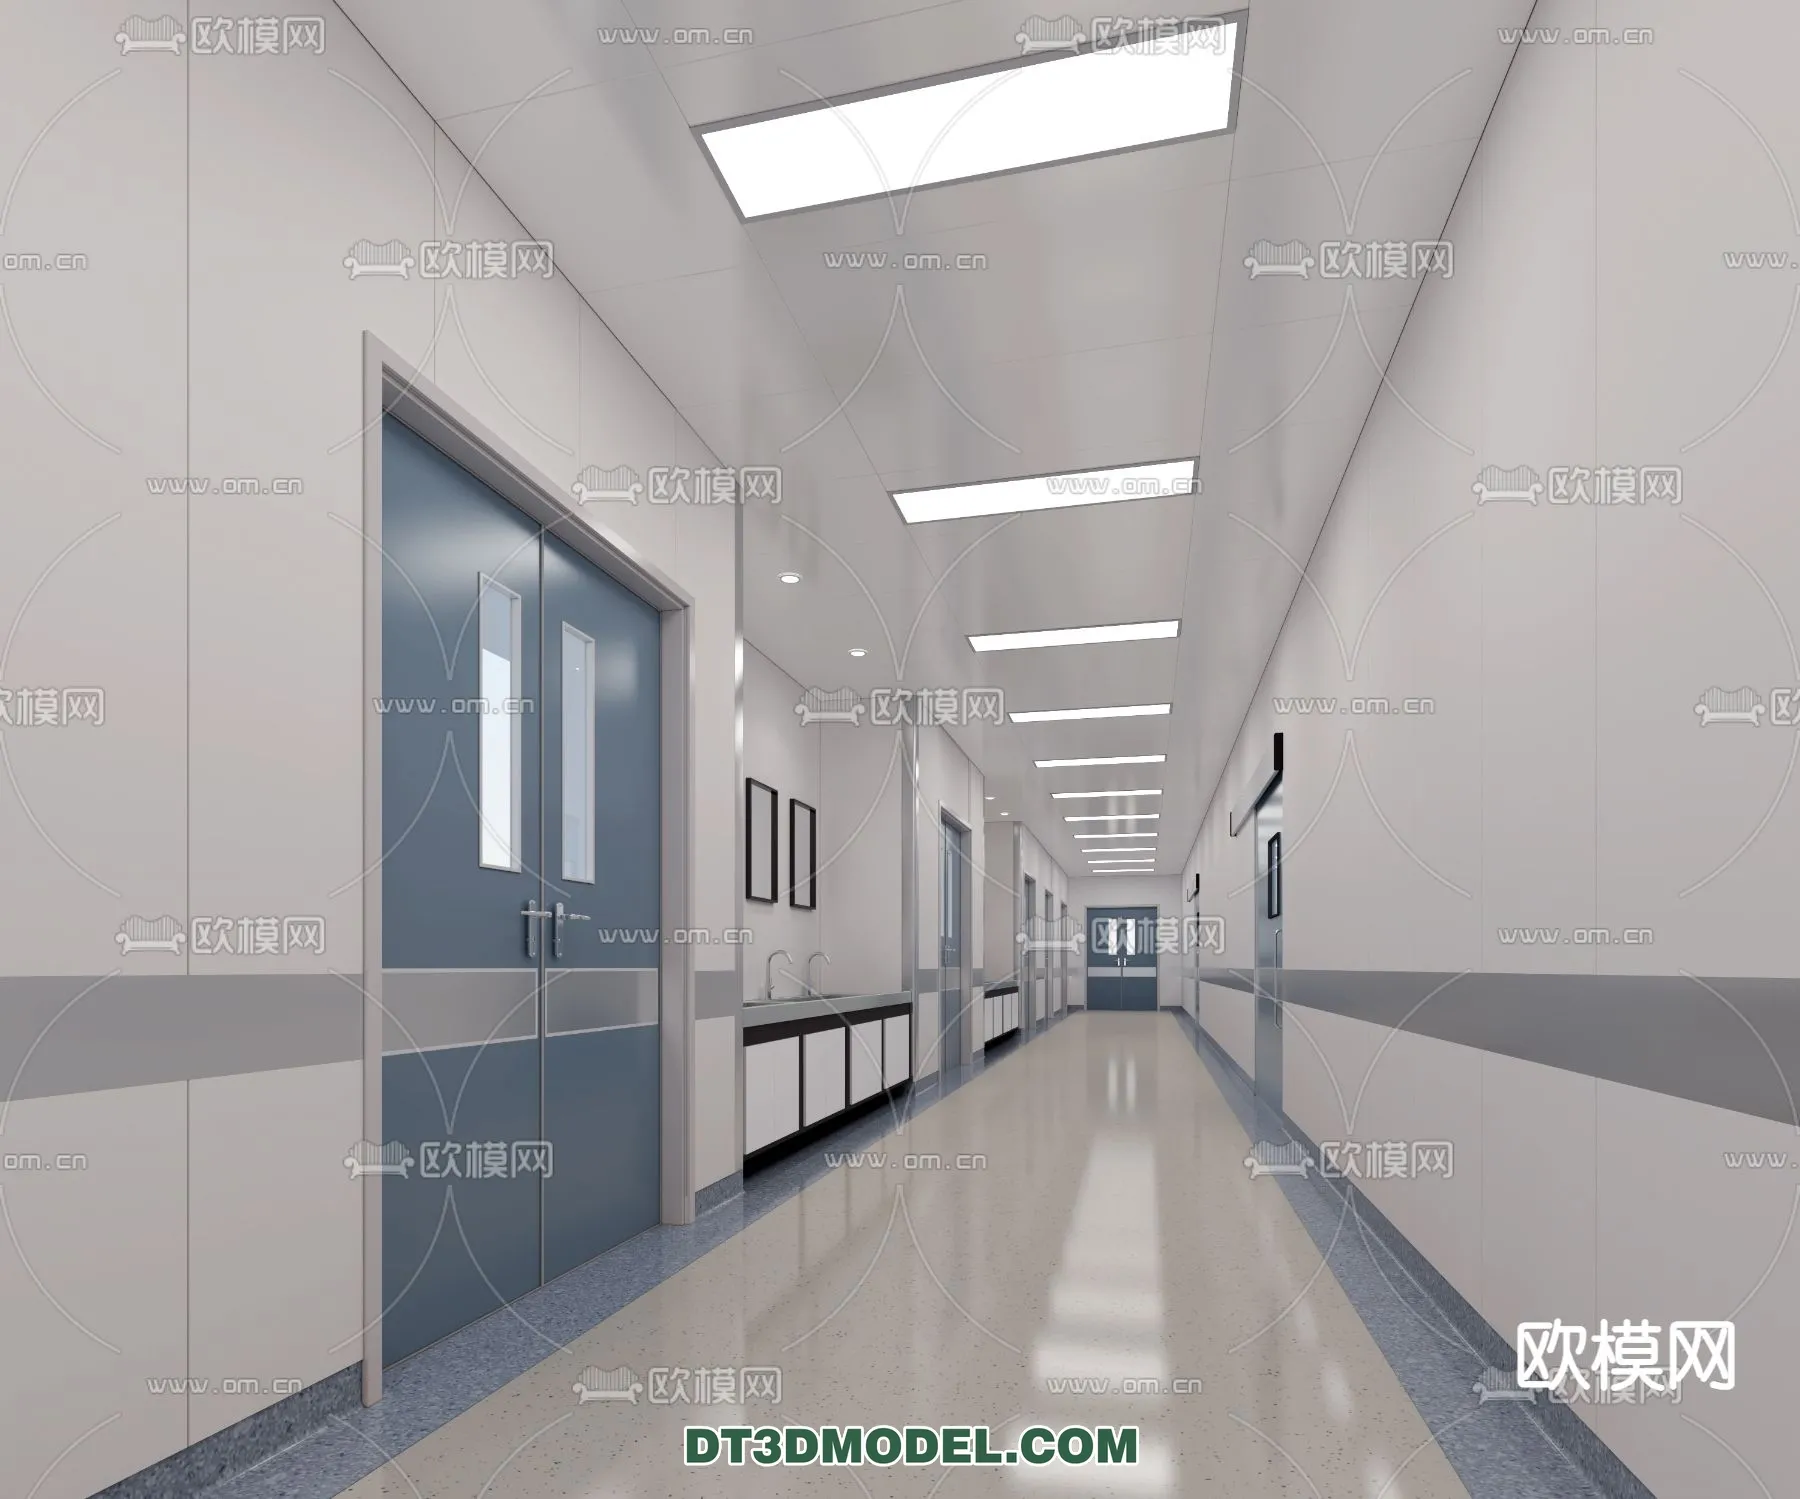 HOSPITAL 3D SCENES – MODERN – 0101